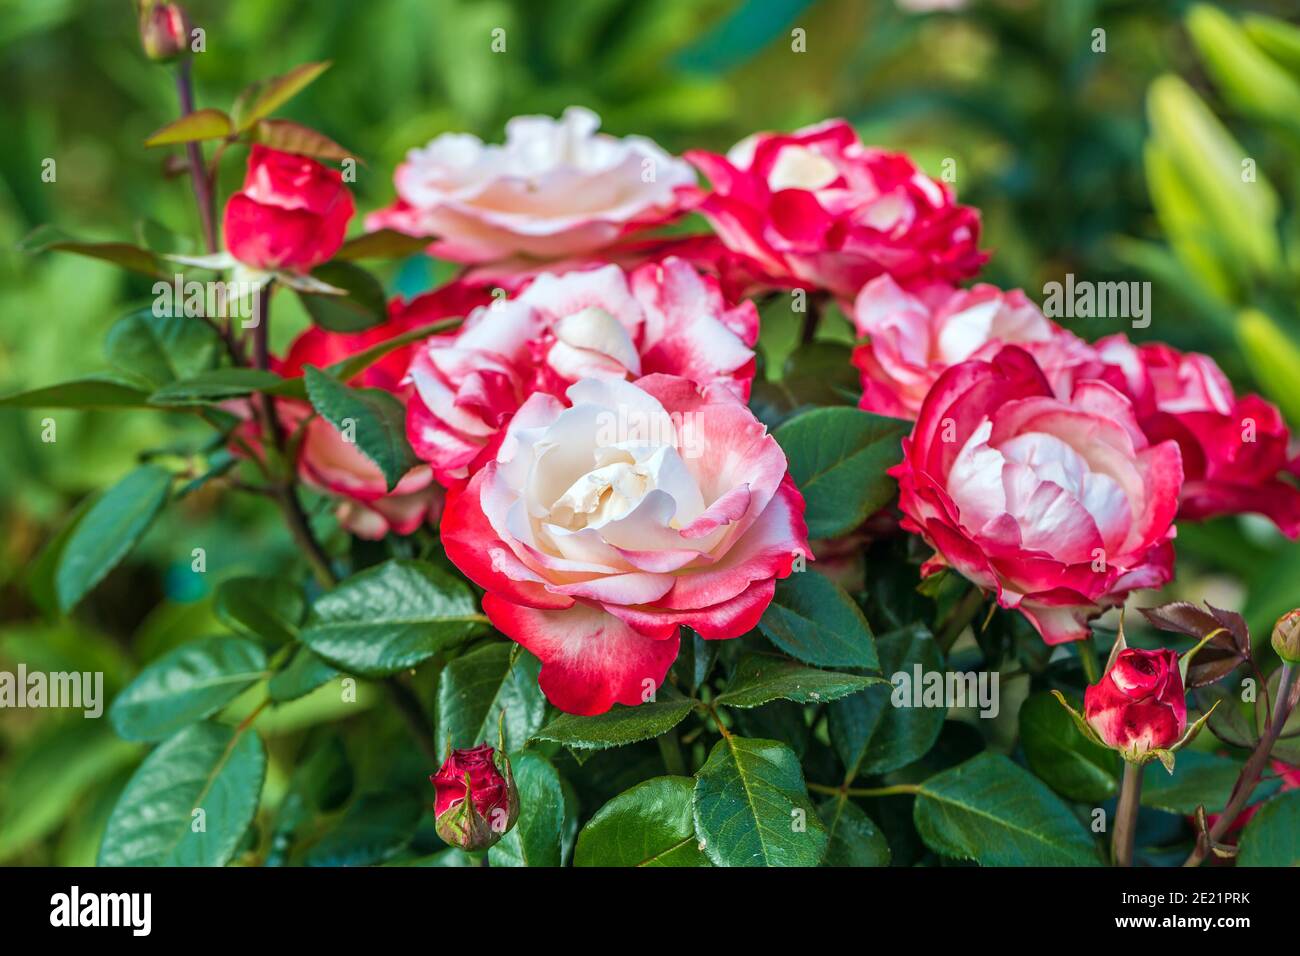 Close-up of Nostalgia's hybrid tea rose in the garden Stock Photo